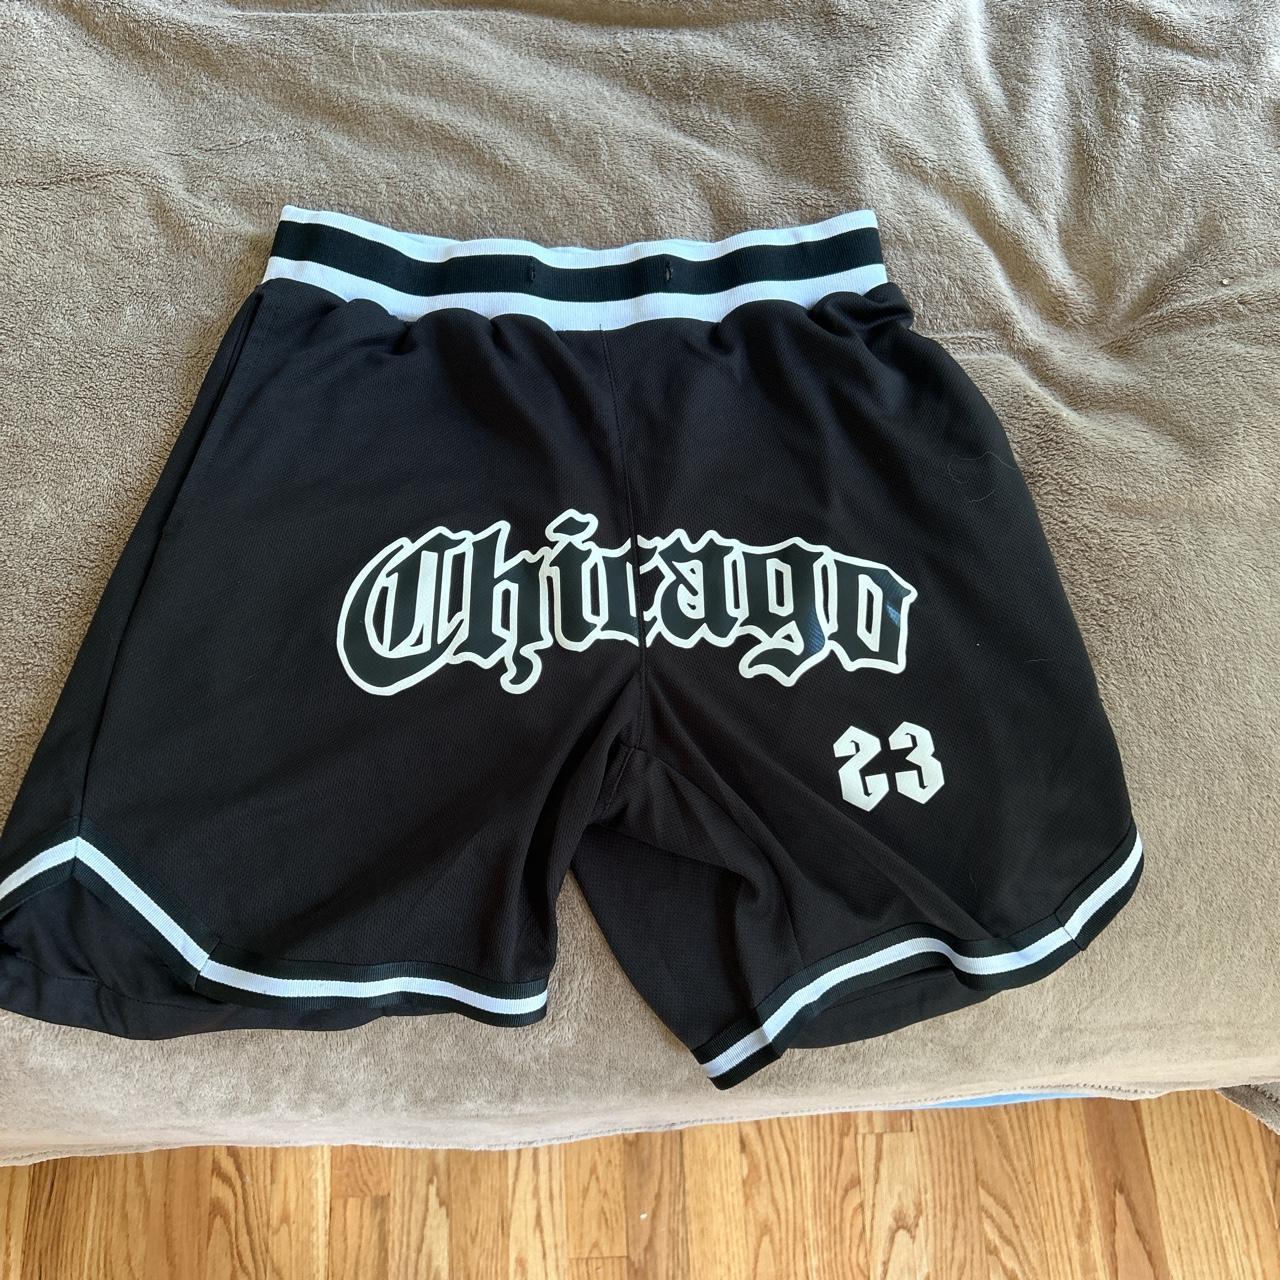 chicago 23 shorts